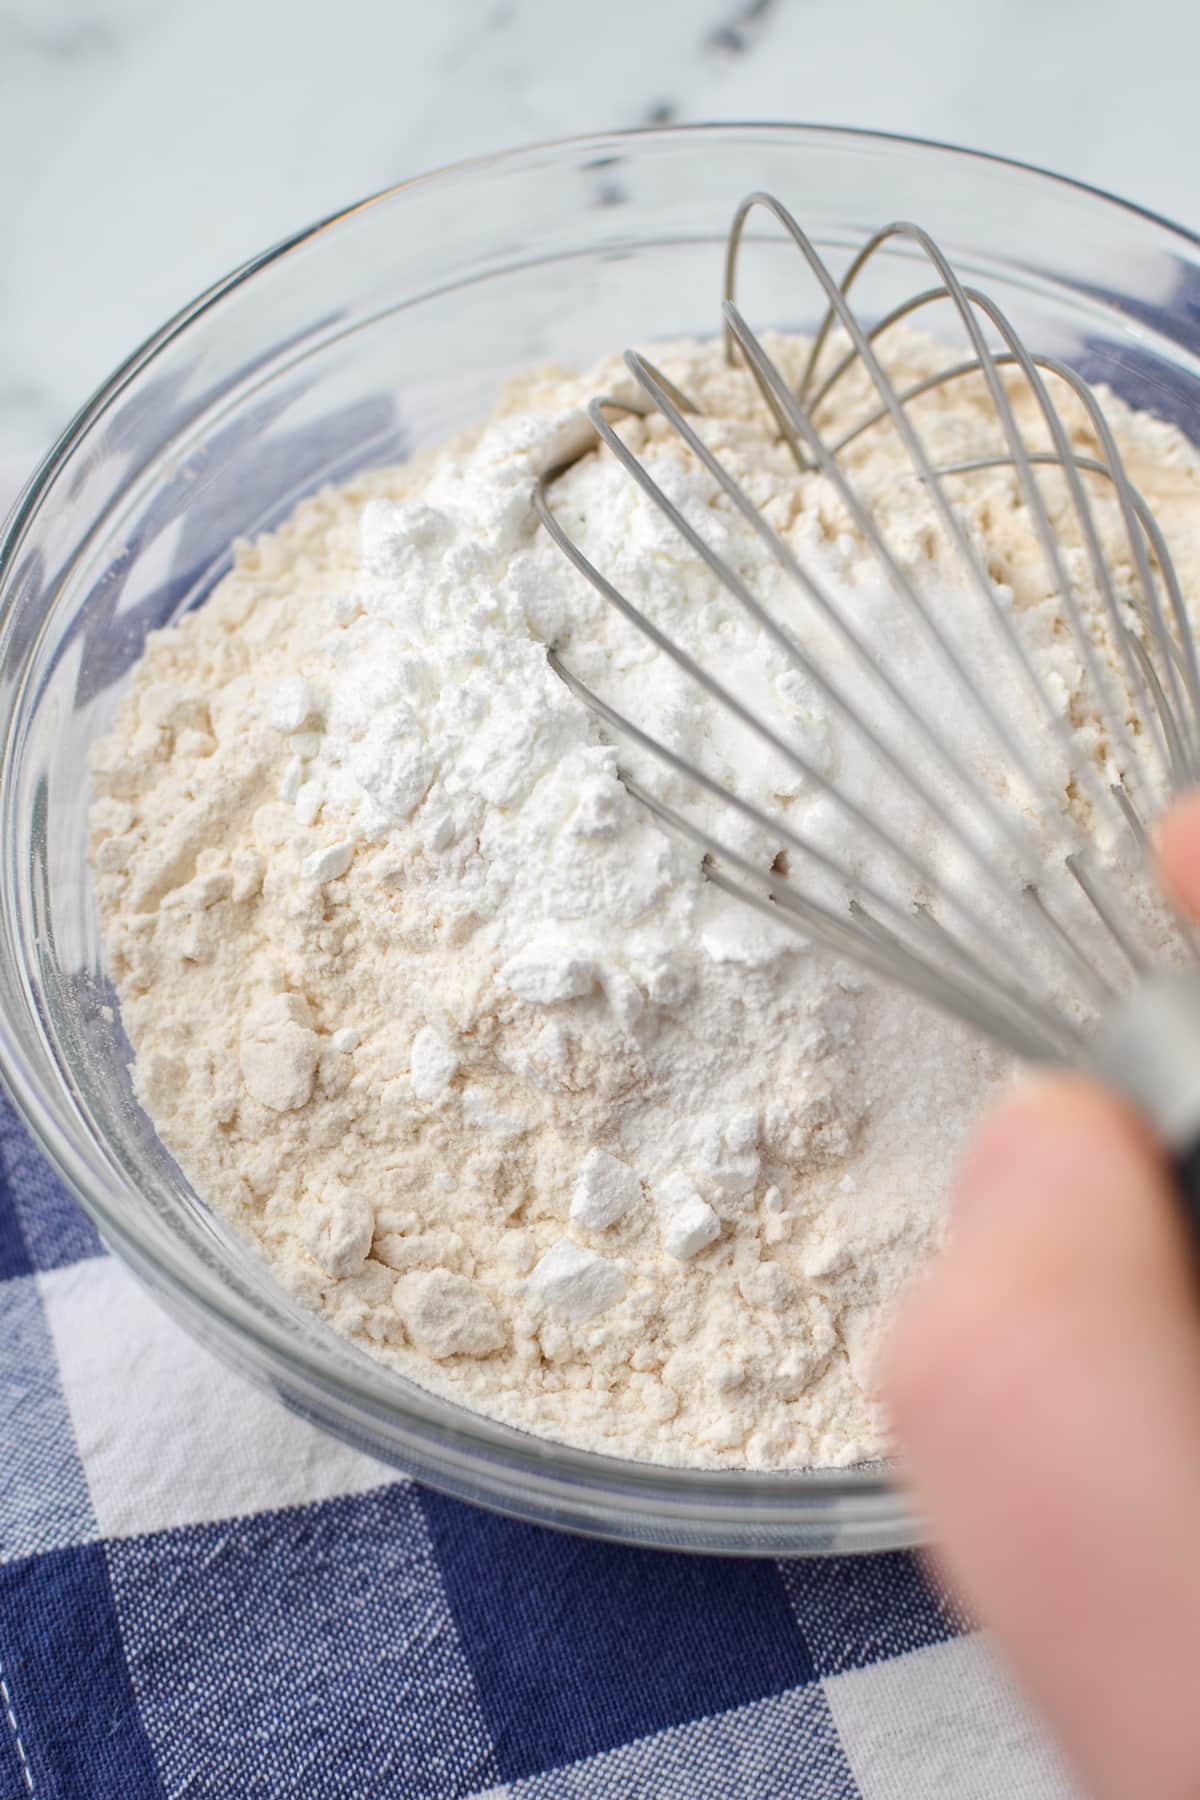 Whisking together flour, baking powder, and salt.